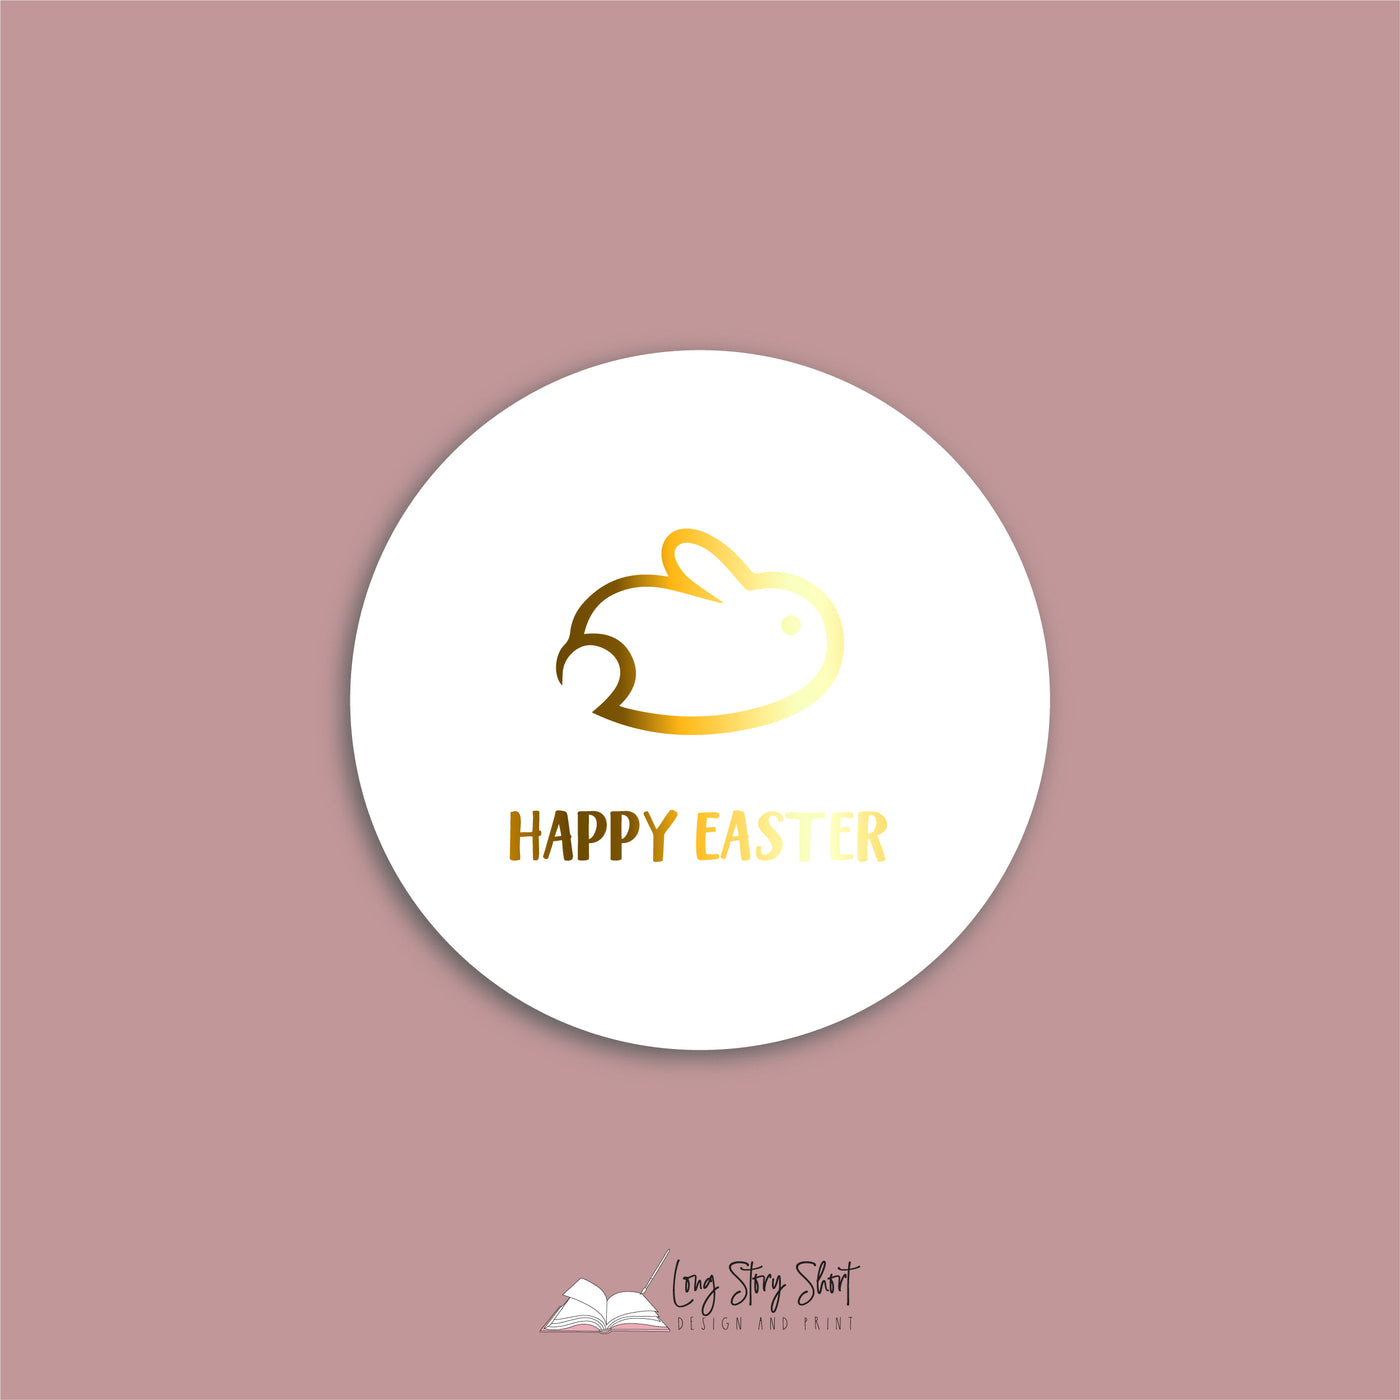 Happy Easter 3 Bunnies Vinyl Label Pack (Round) Matte/Gloss/Foil